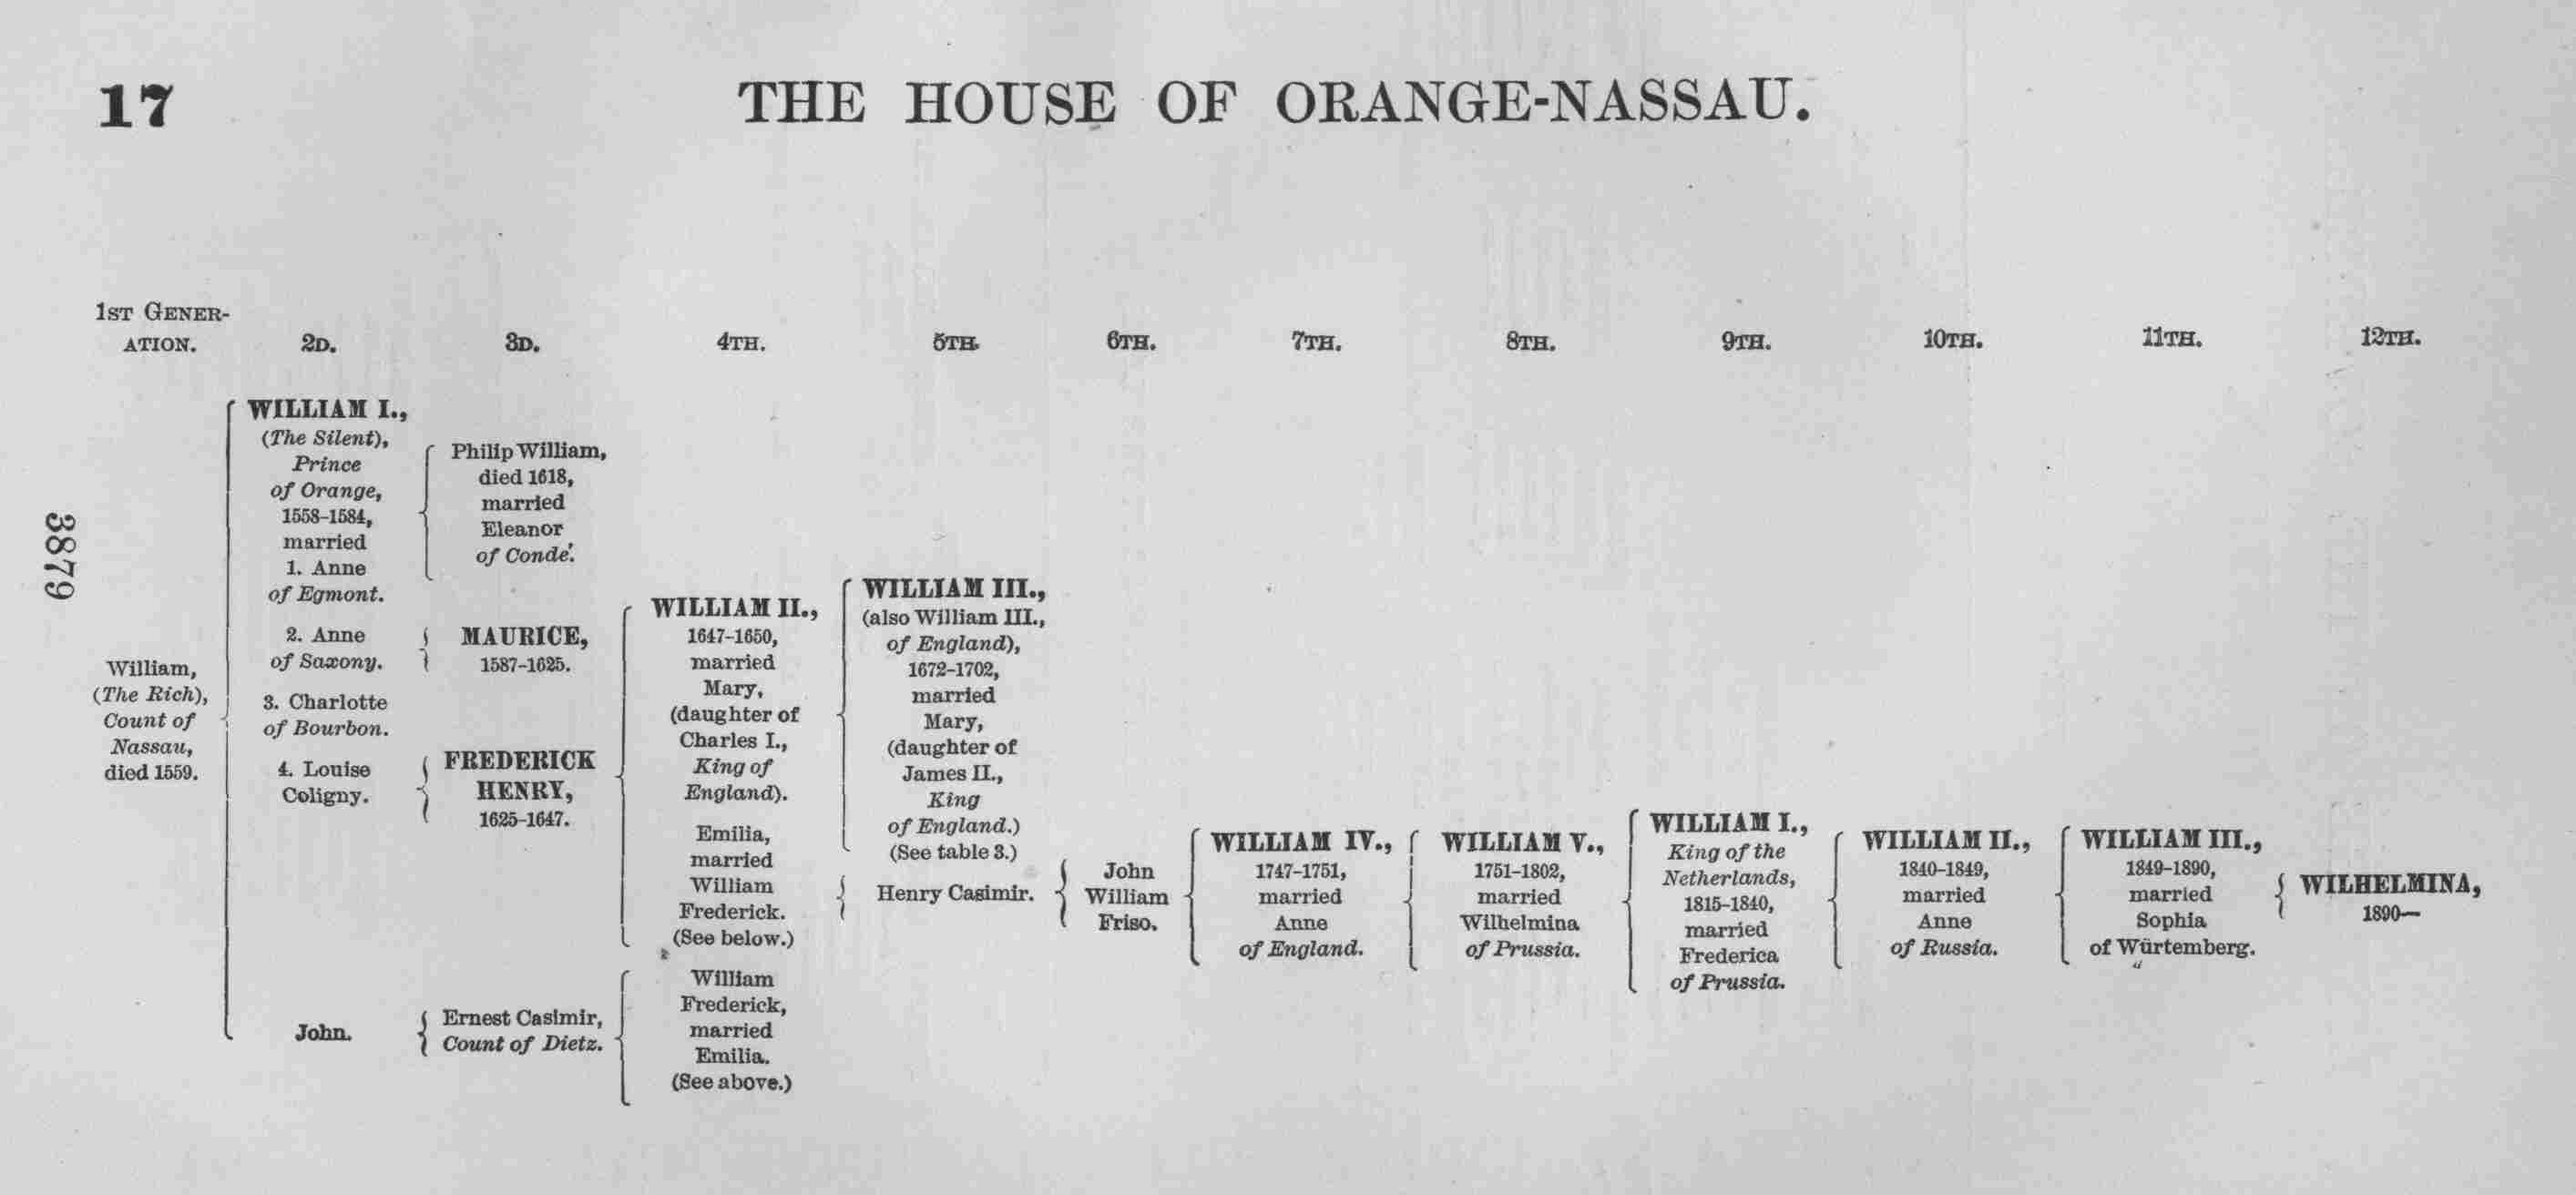 THE HOUSE OF ORANGE-NASSAU.